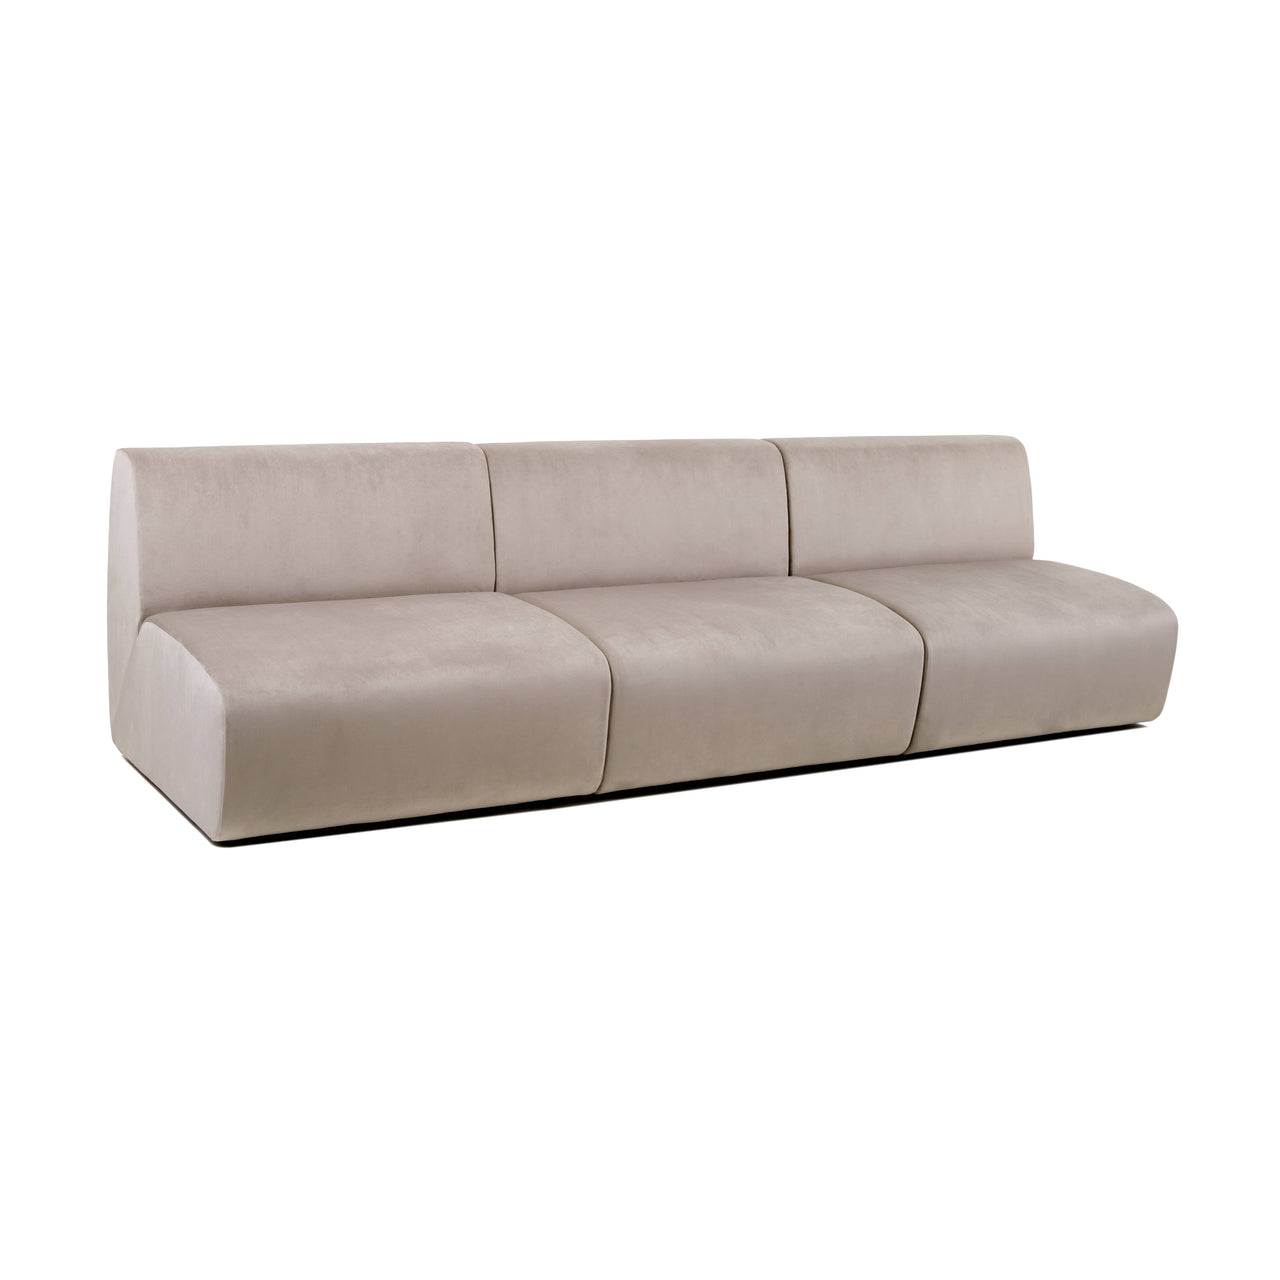 Infinity Modular Sofa: Composition 4